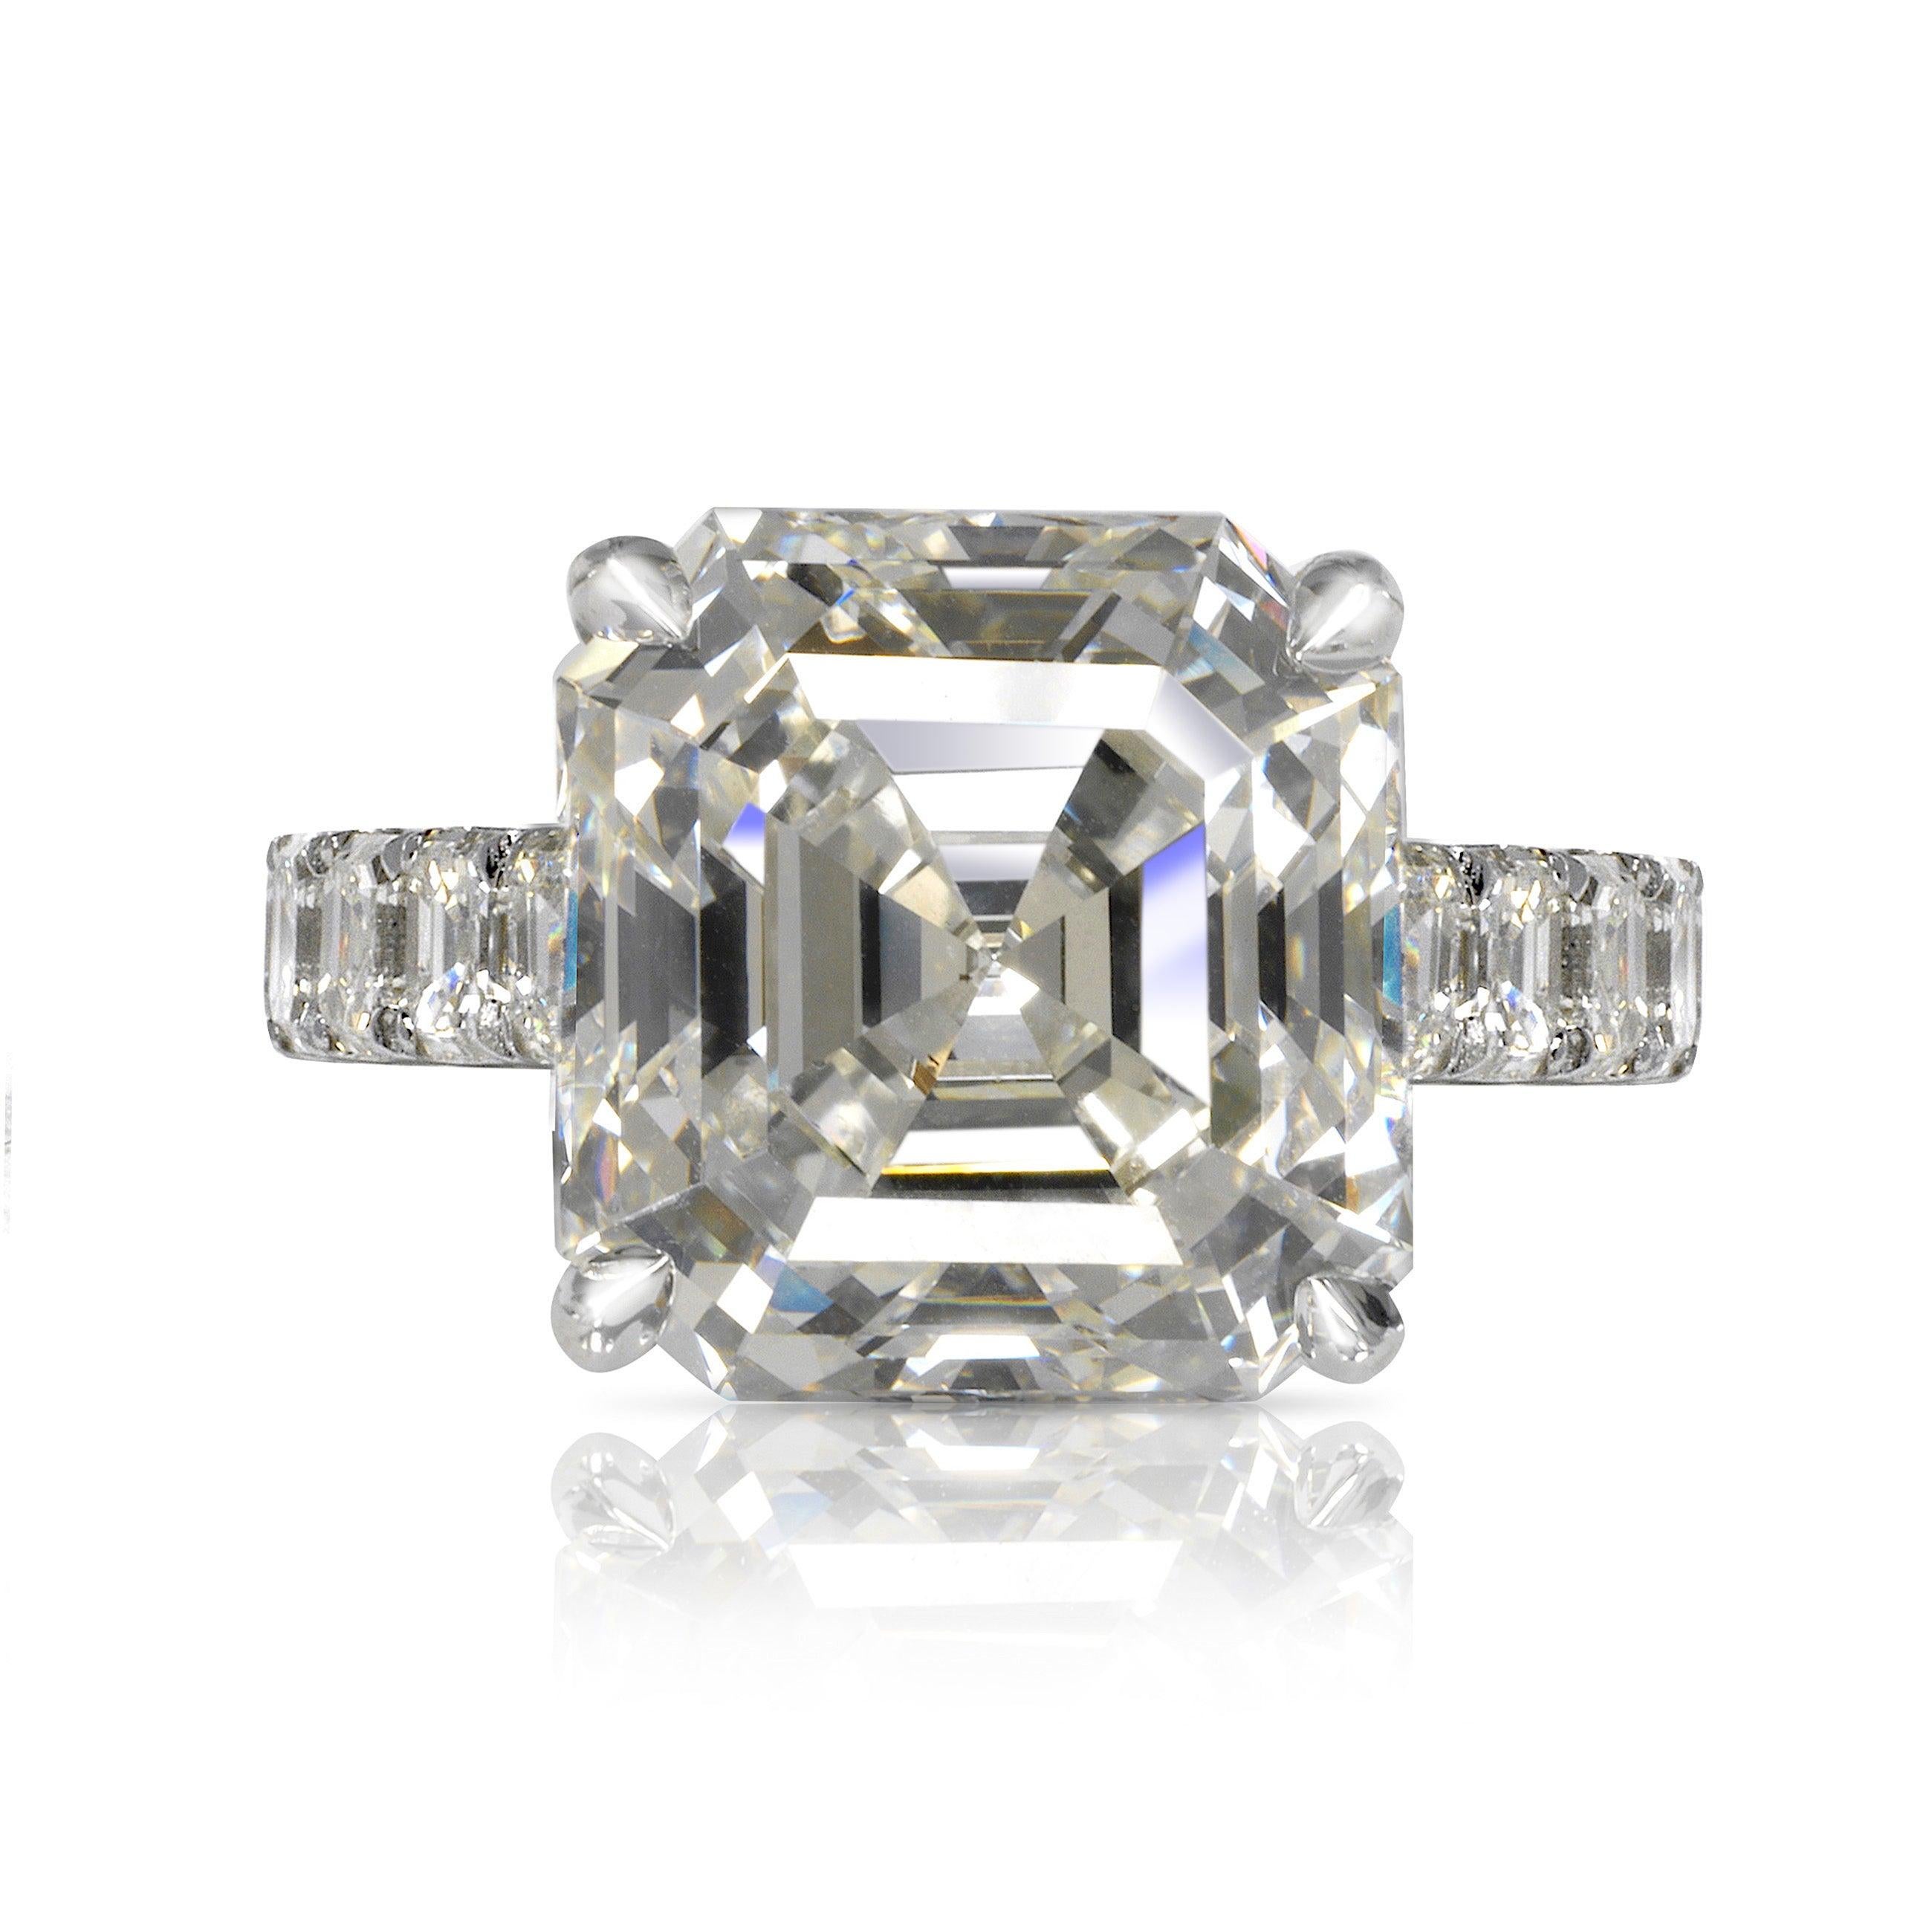 ZELLA ASSCHER CUT DIAMOND ENGAGEMENT RING BY MIKE NEKTA

GIA CERTIFIED 
 
Center Diamond:
Carat Weight: 8.6 Carats
Color : J
Clarity: VS2
Style: ASSCHER CUT / SQUARE EMERALD CUT
Measurements: 11.8 x 11.3 x 7.7 mm


Ring:
Metal: 18K WHITE GOLD 